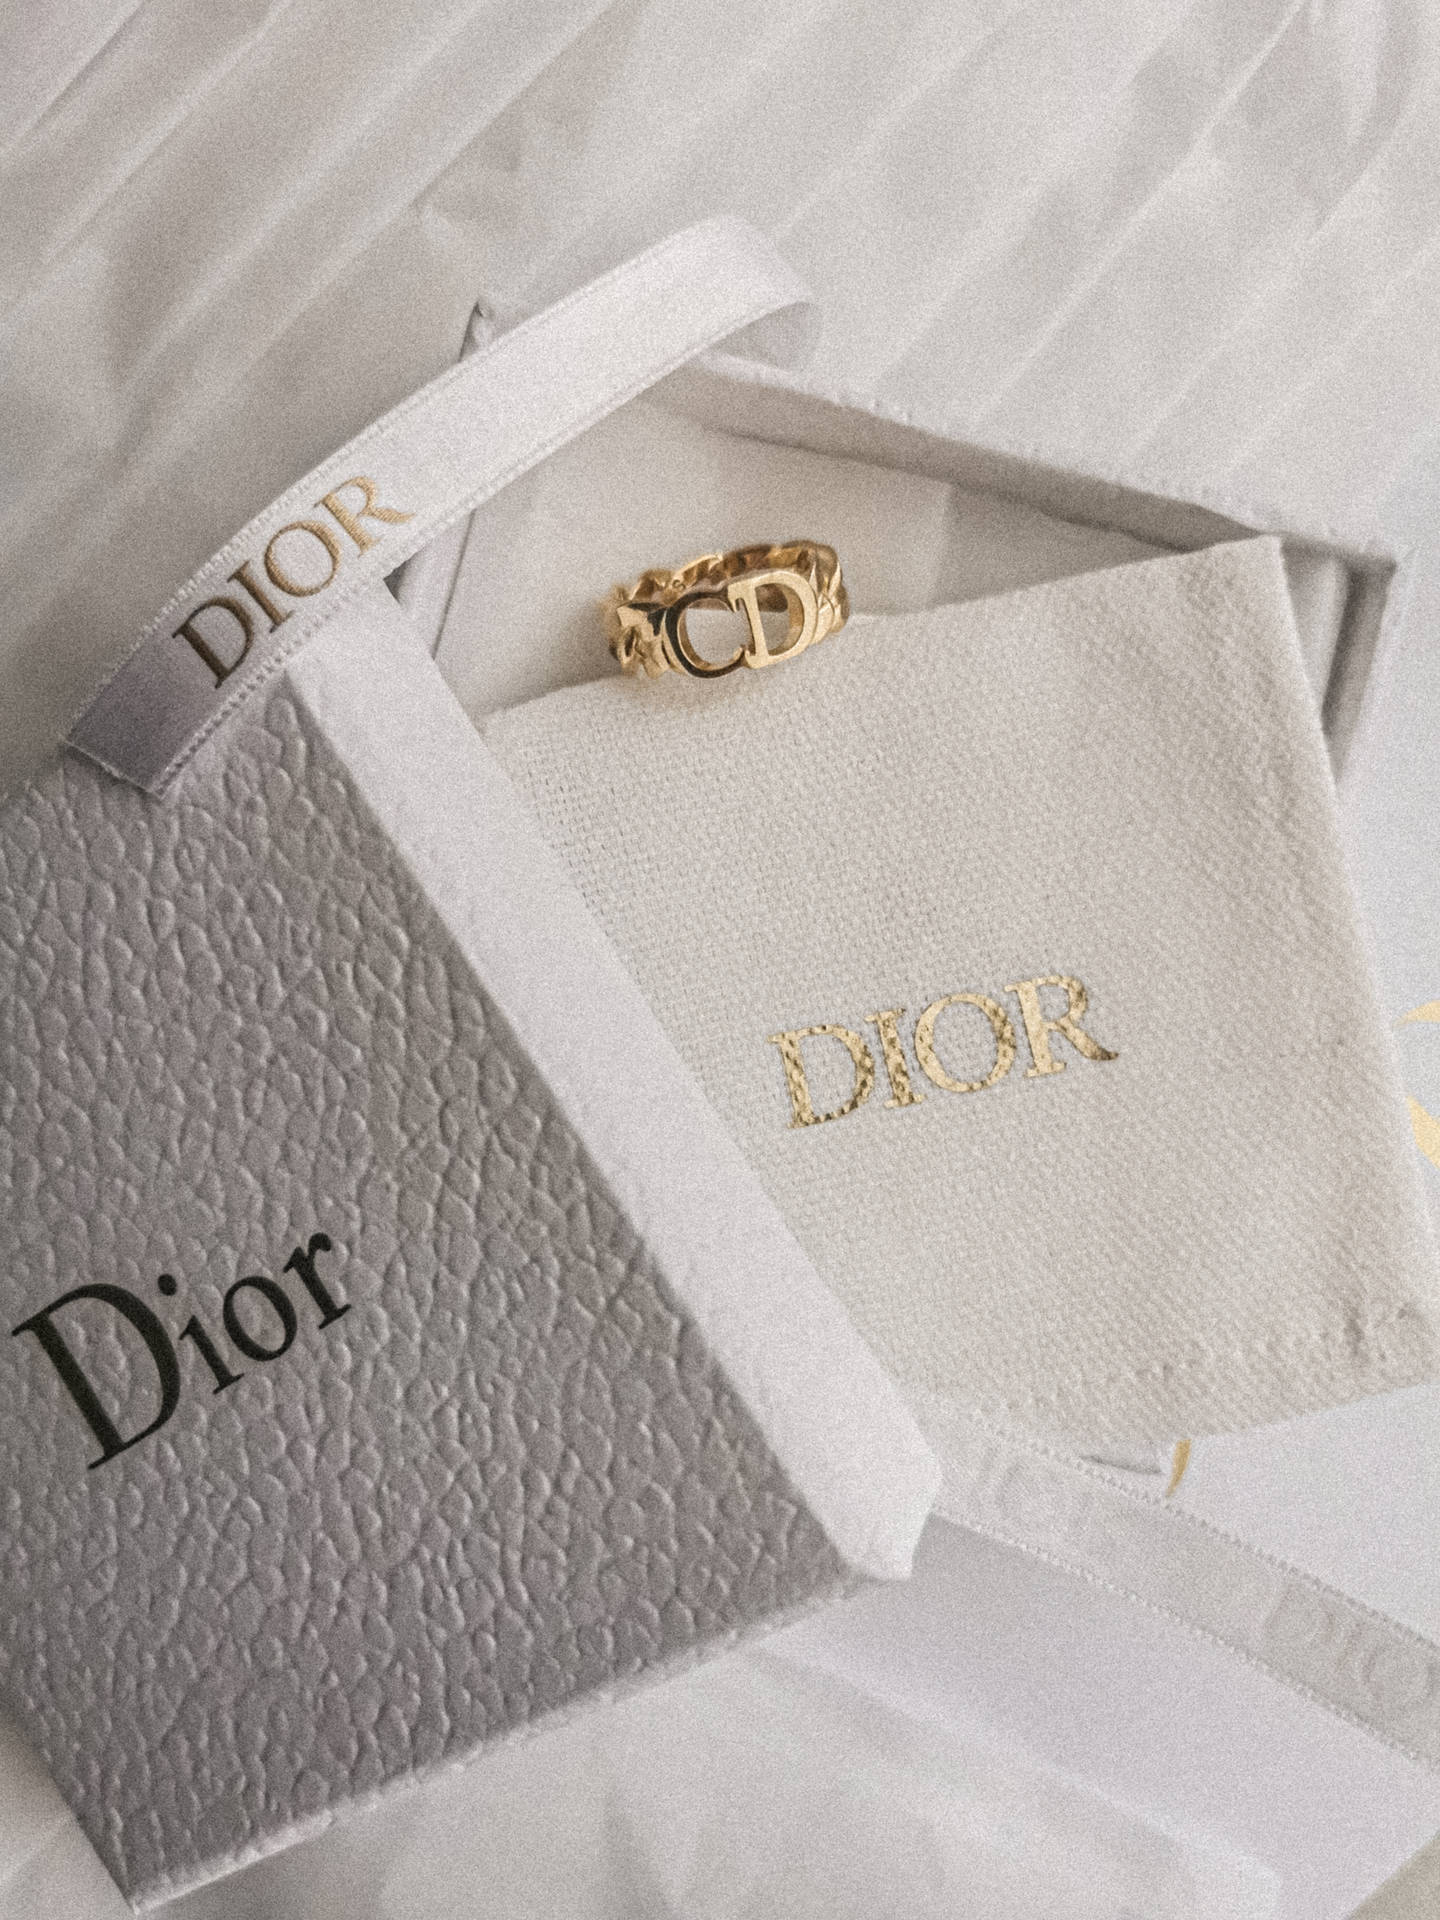 Dior Gold Ring And Gift Box